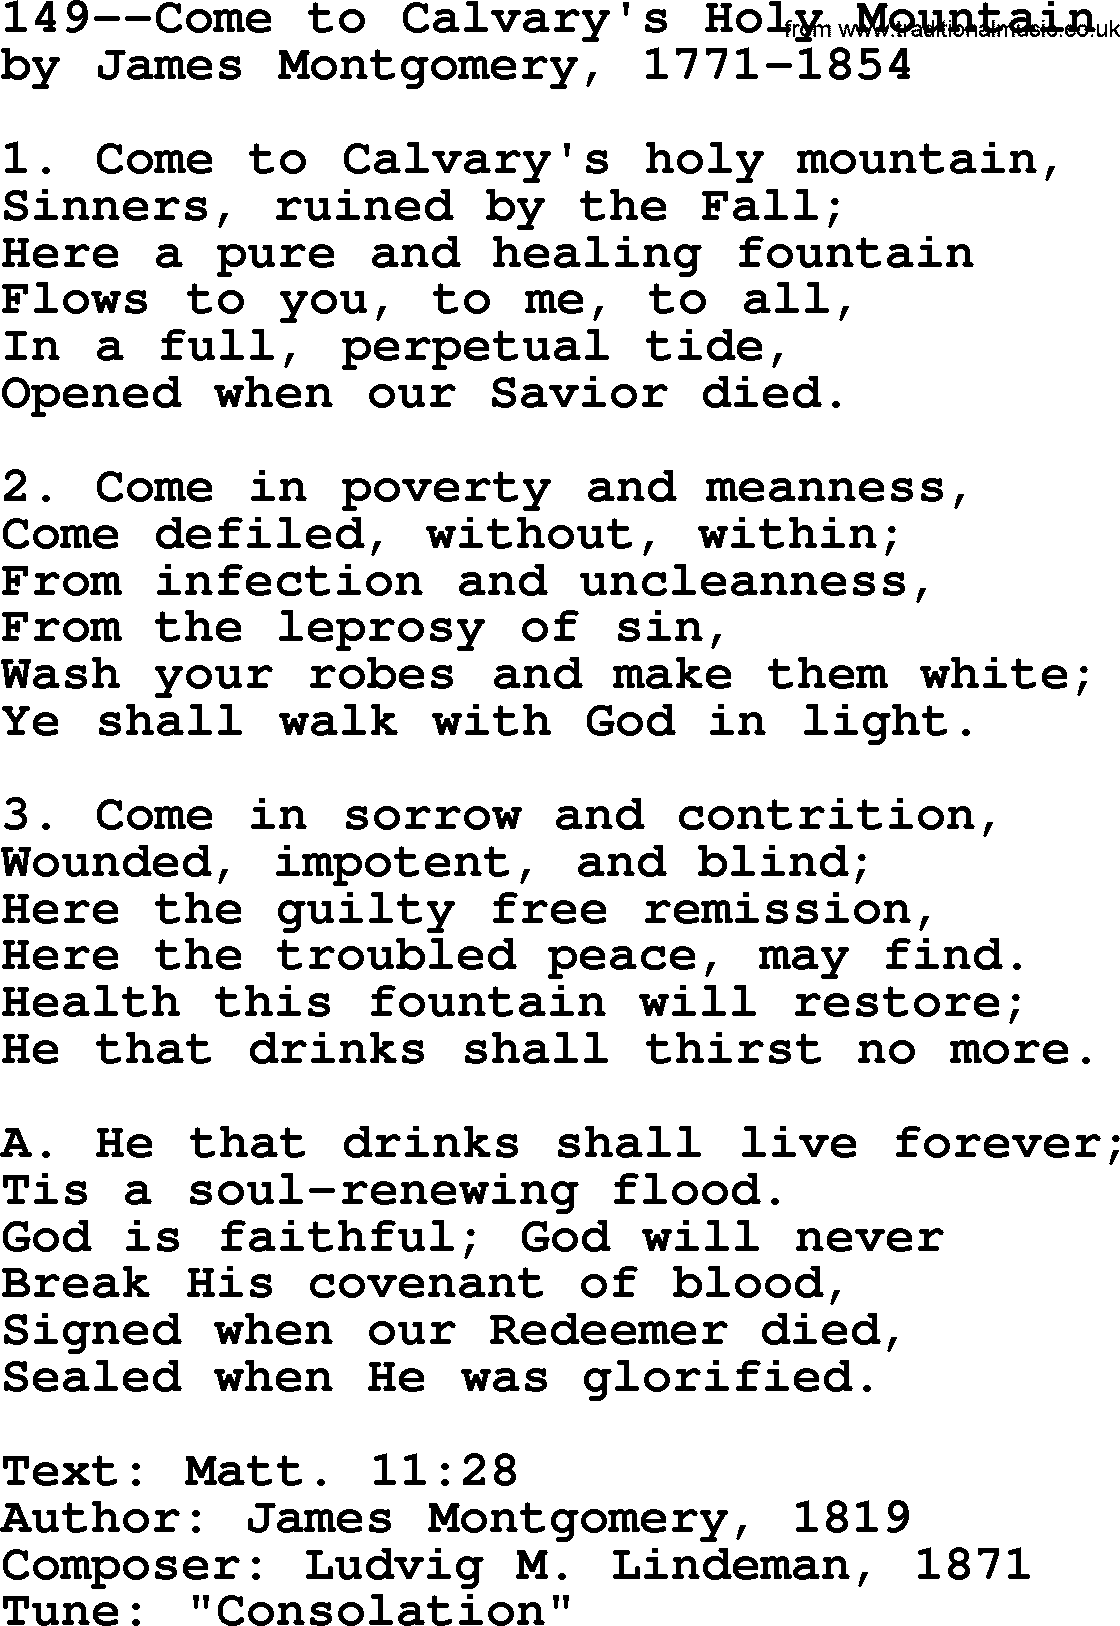 Lutheran Hymn: 149--Come to Calvary's Holy Mountain.txt lyrics with PDF